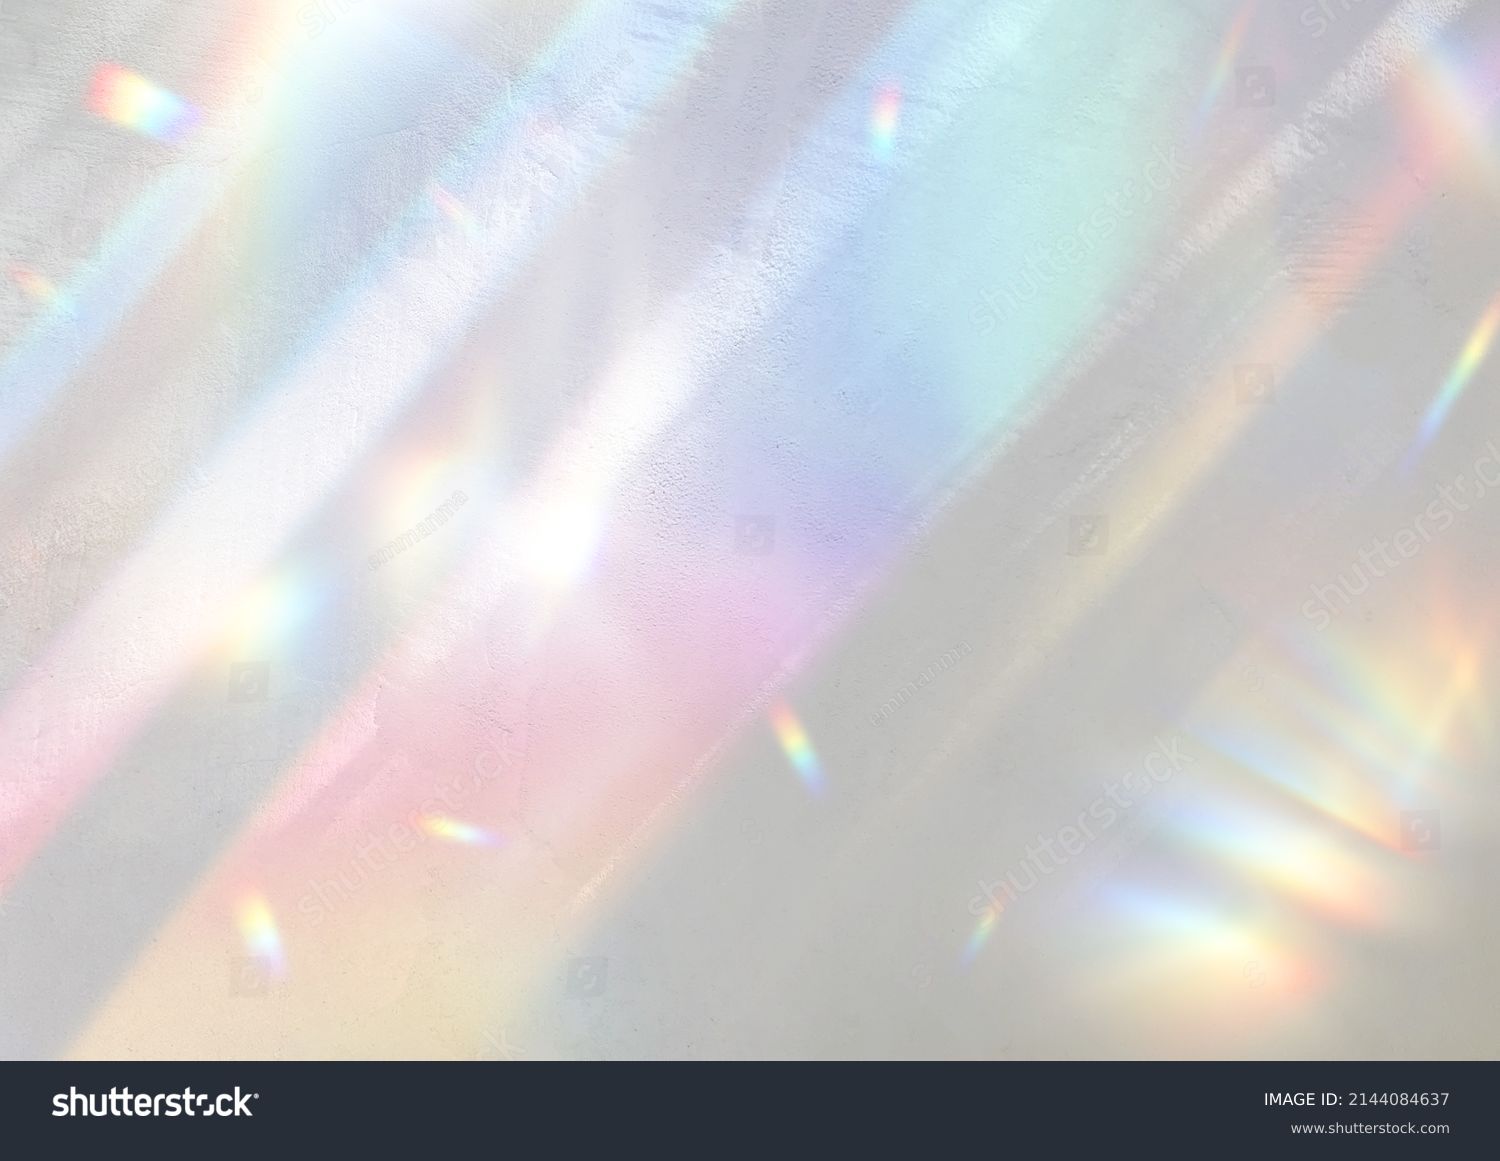 Background Texture Prism Light Rainbow Overlay Sunlight Glitter #2144084637